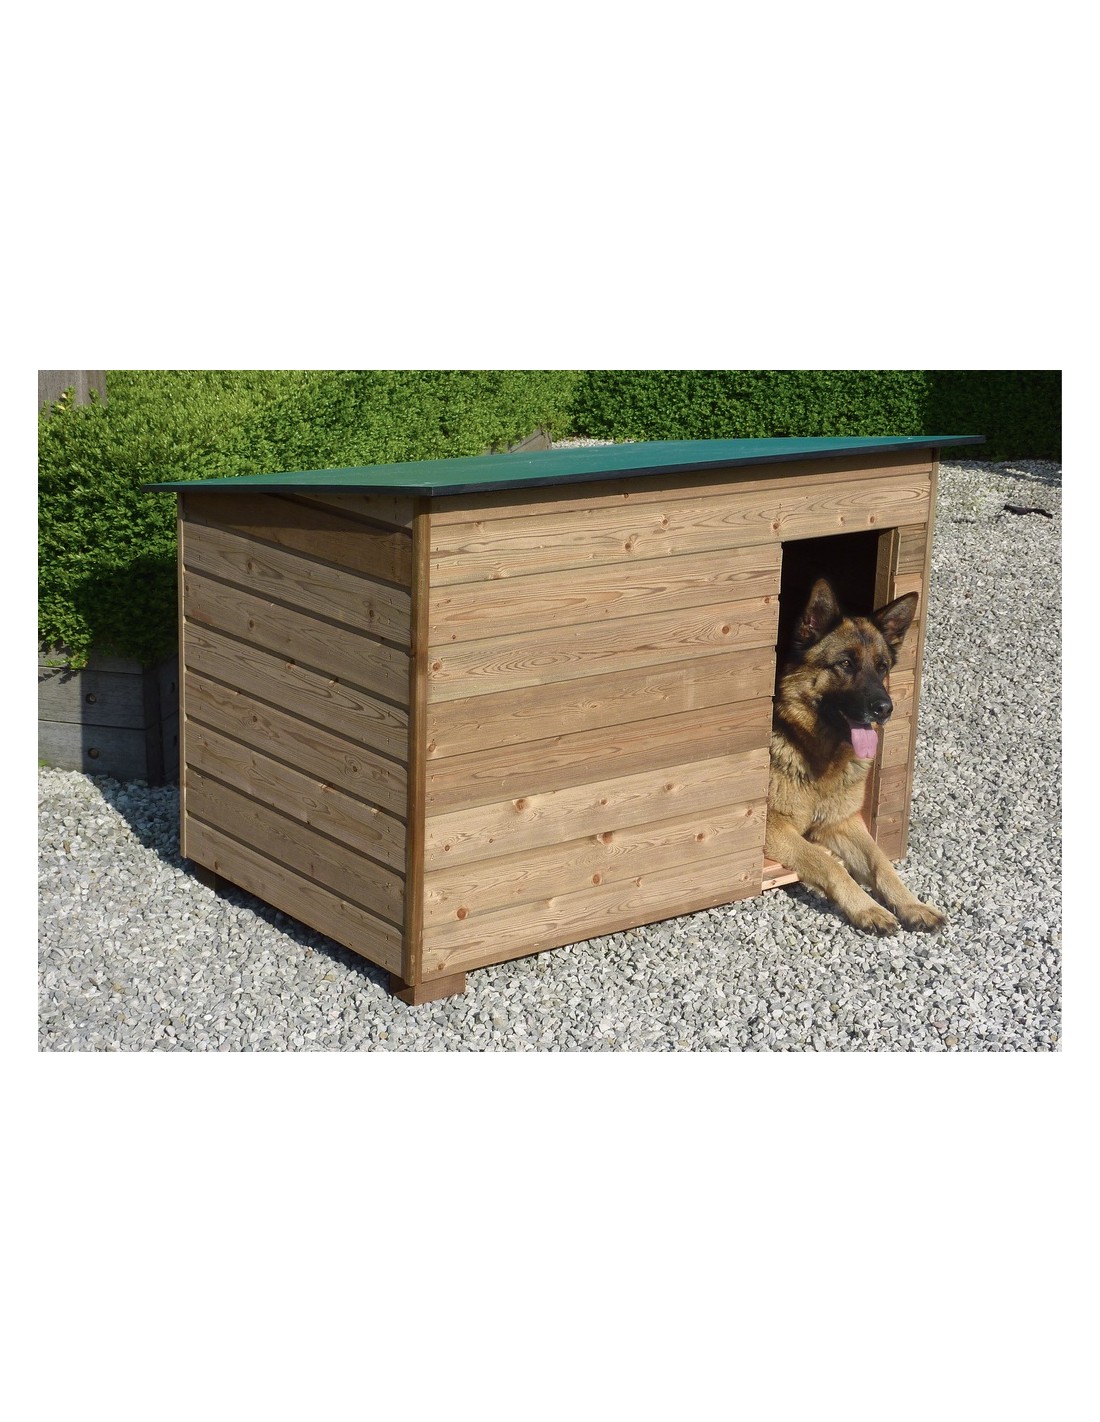 Hondenhok met achteroverhellend dak kopen - Hondenhok - Advance Greenshop